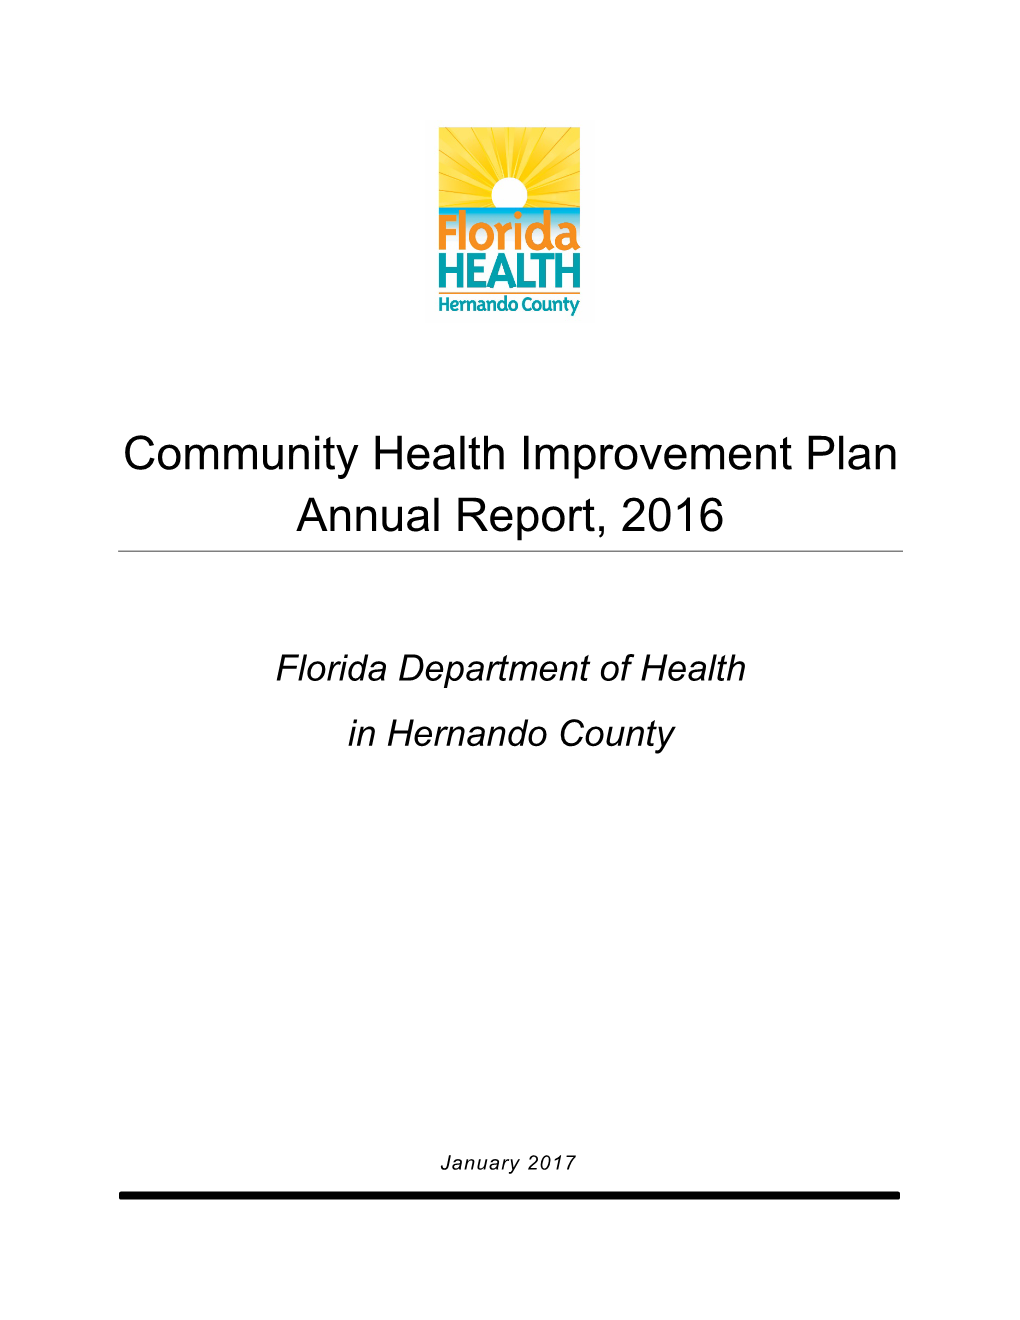 Community Health Improvement Plan Annual Report, 2016